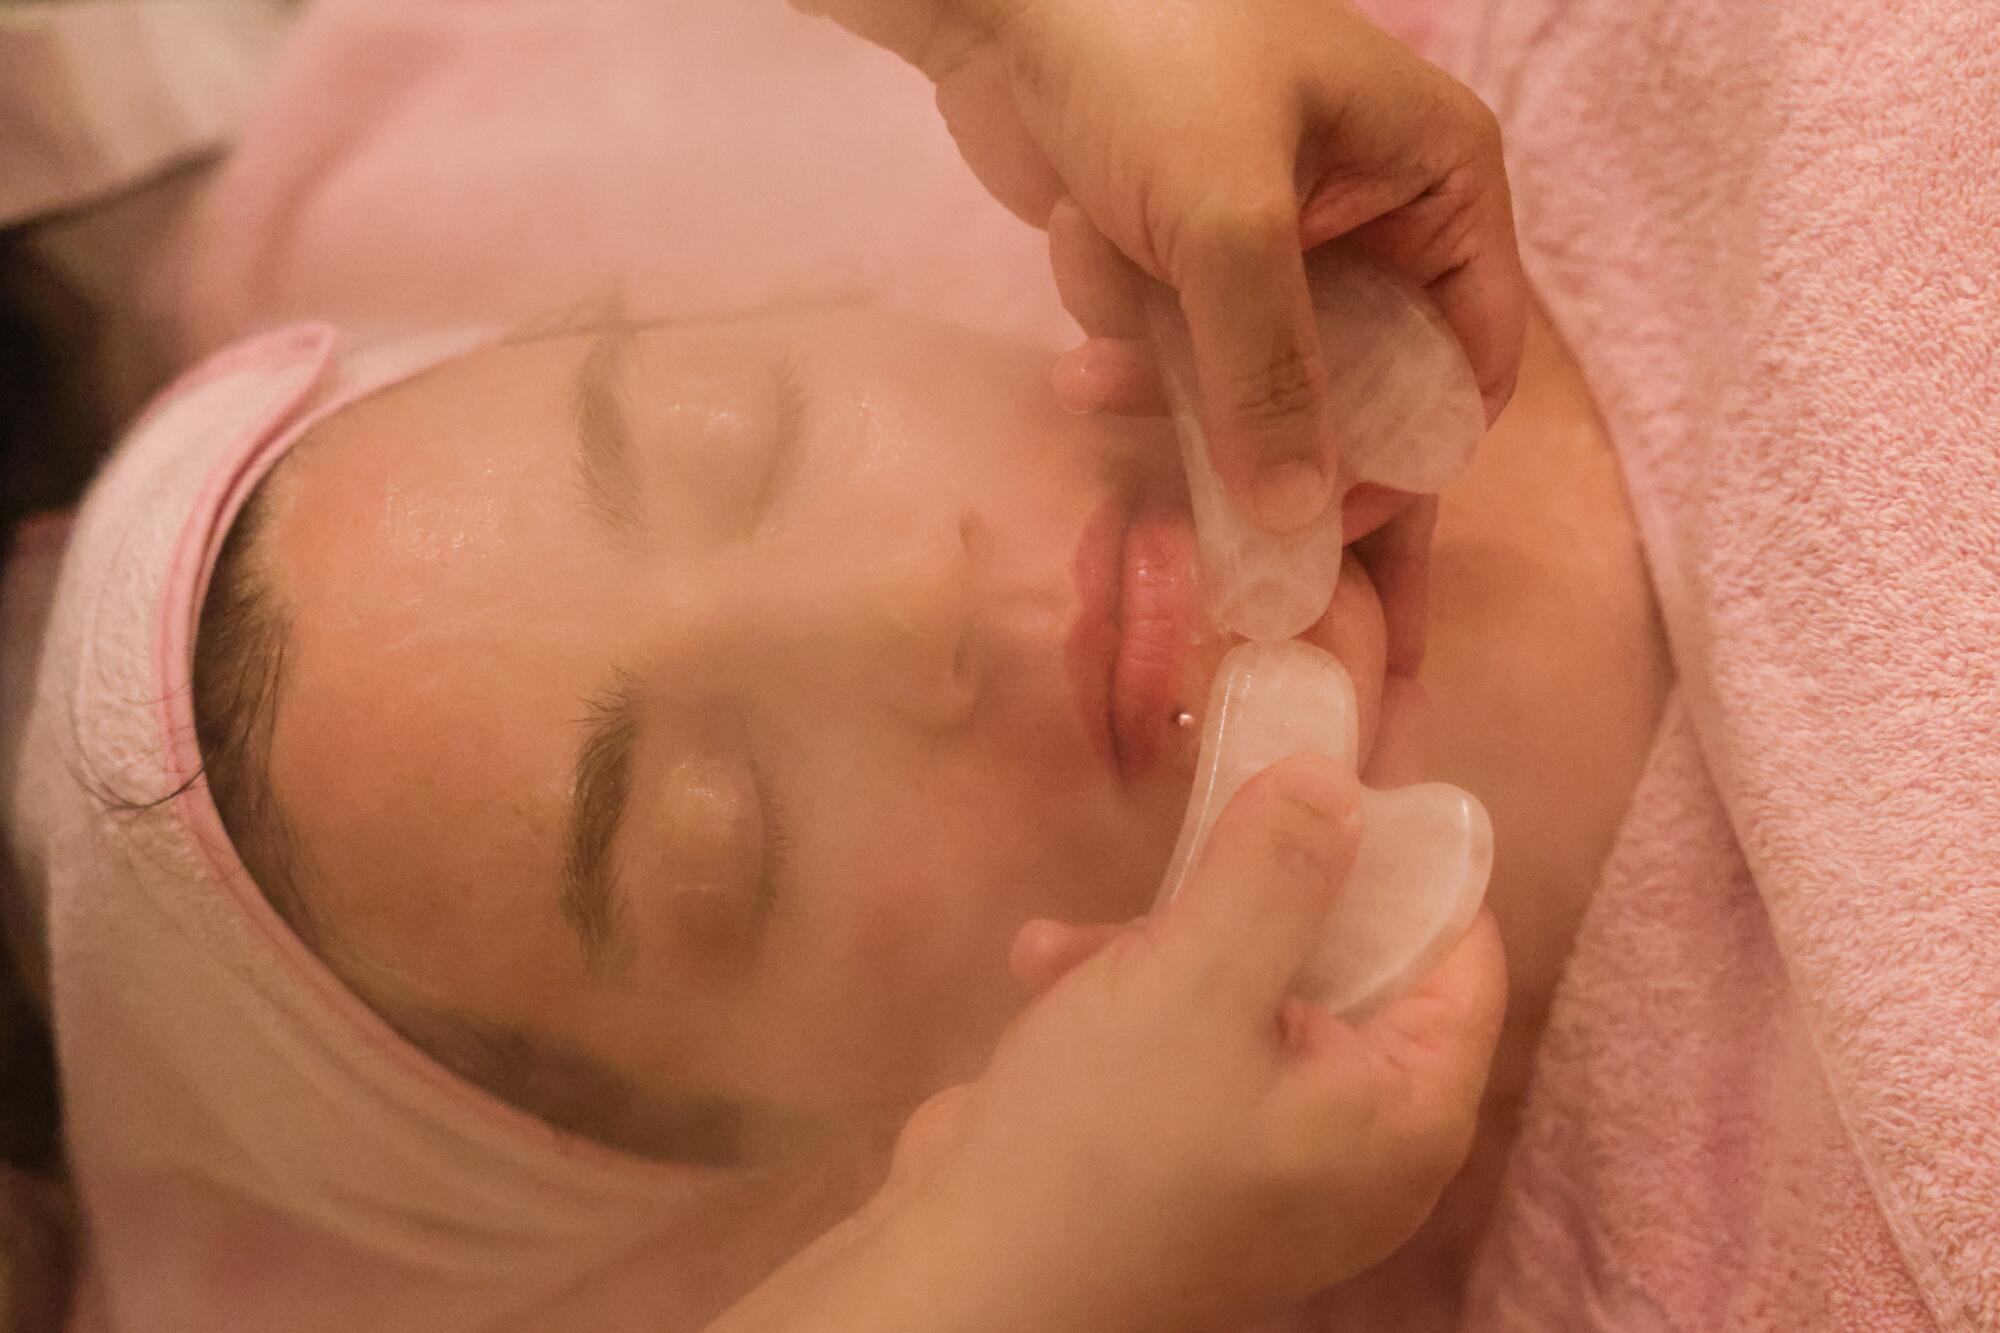 A woman getting a facial.